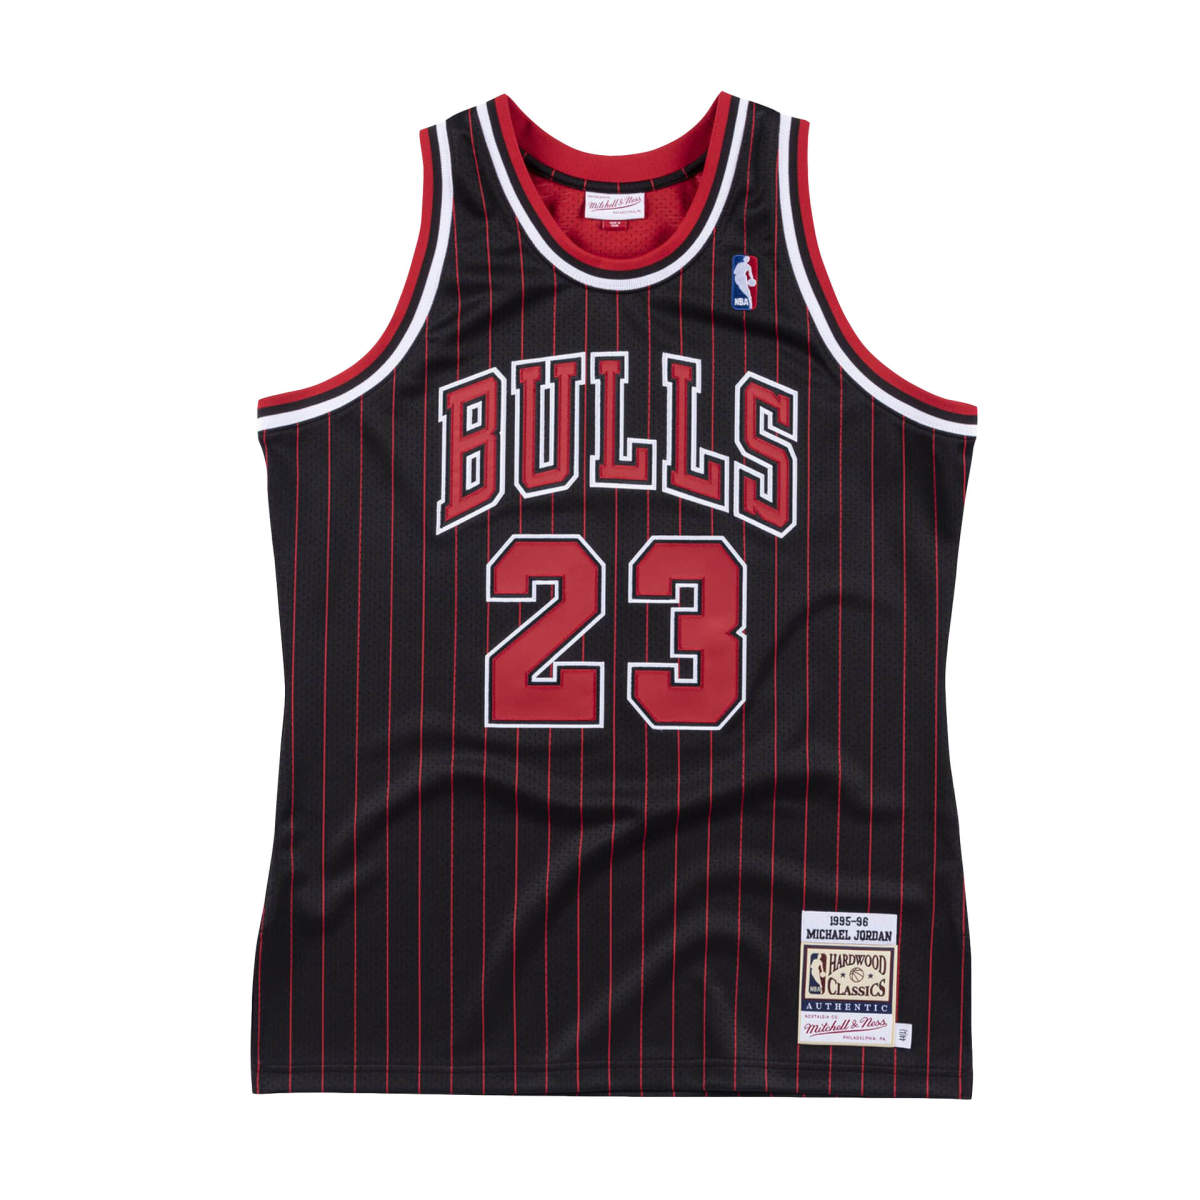 Chicago bulls alternate authentic jersey 1995-96 jordan